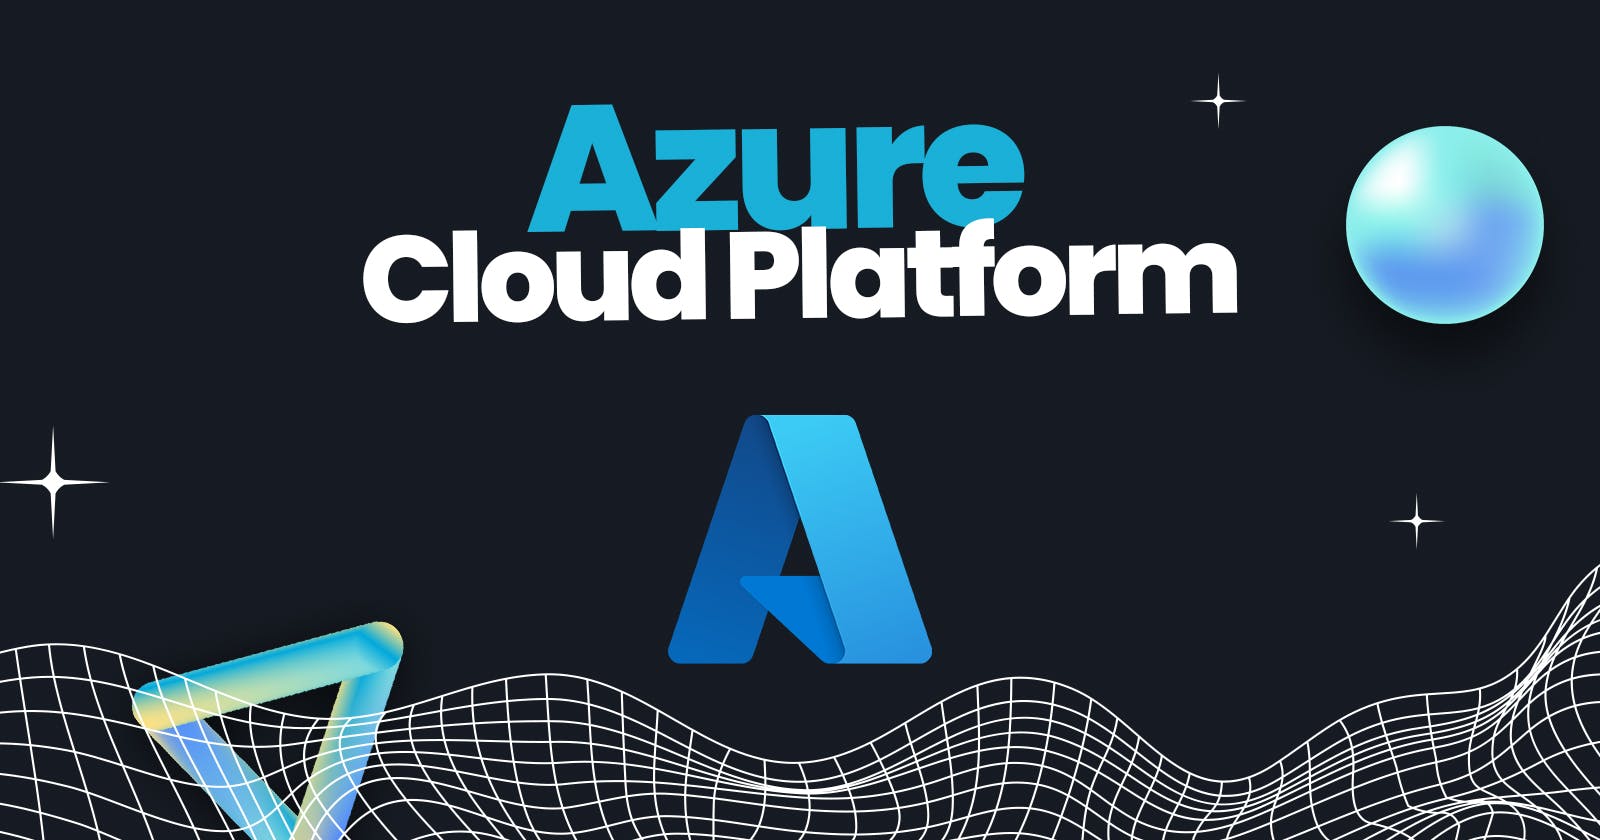 Azure Cloud Platform: Features, Services, and Benefits | Microsoft Azure